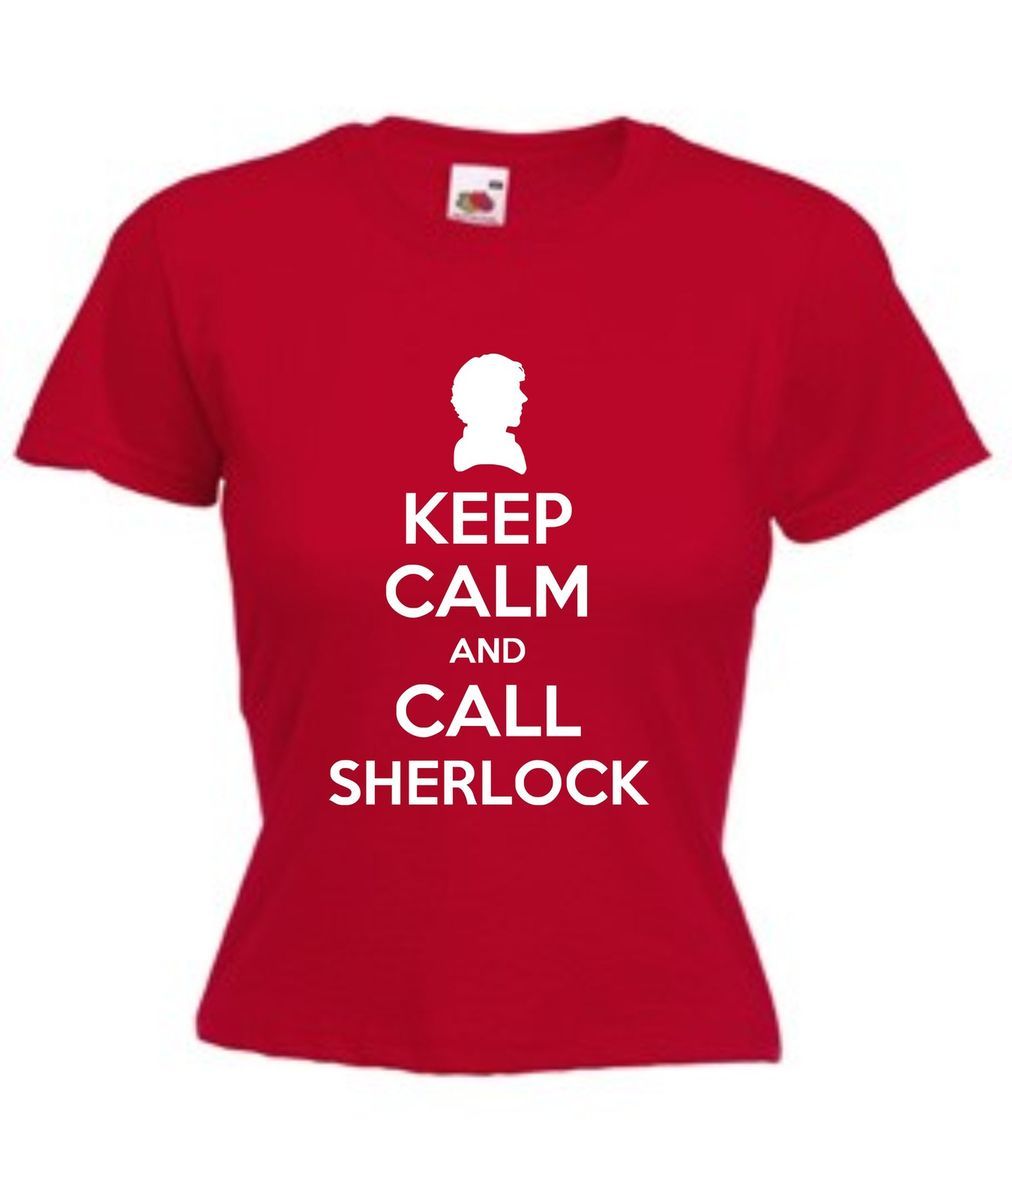  Call Sherlock T Shirt Mens Ladies Great Gift Holmes Cumberbatch